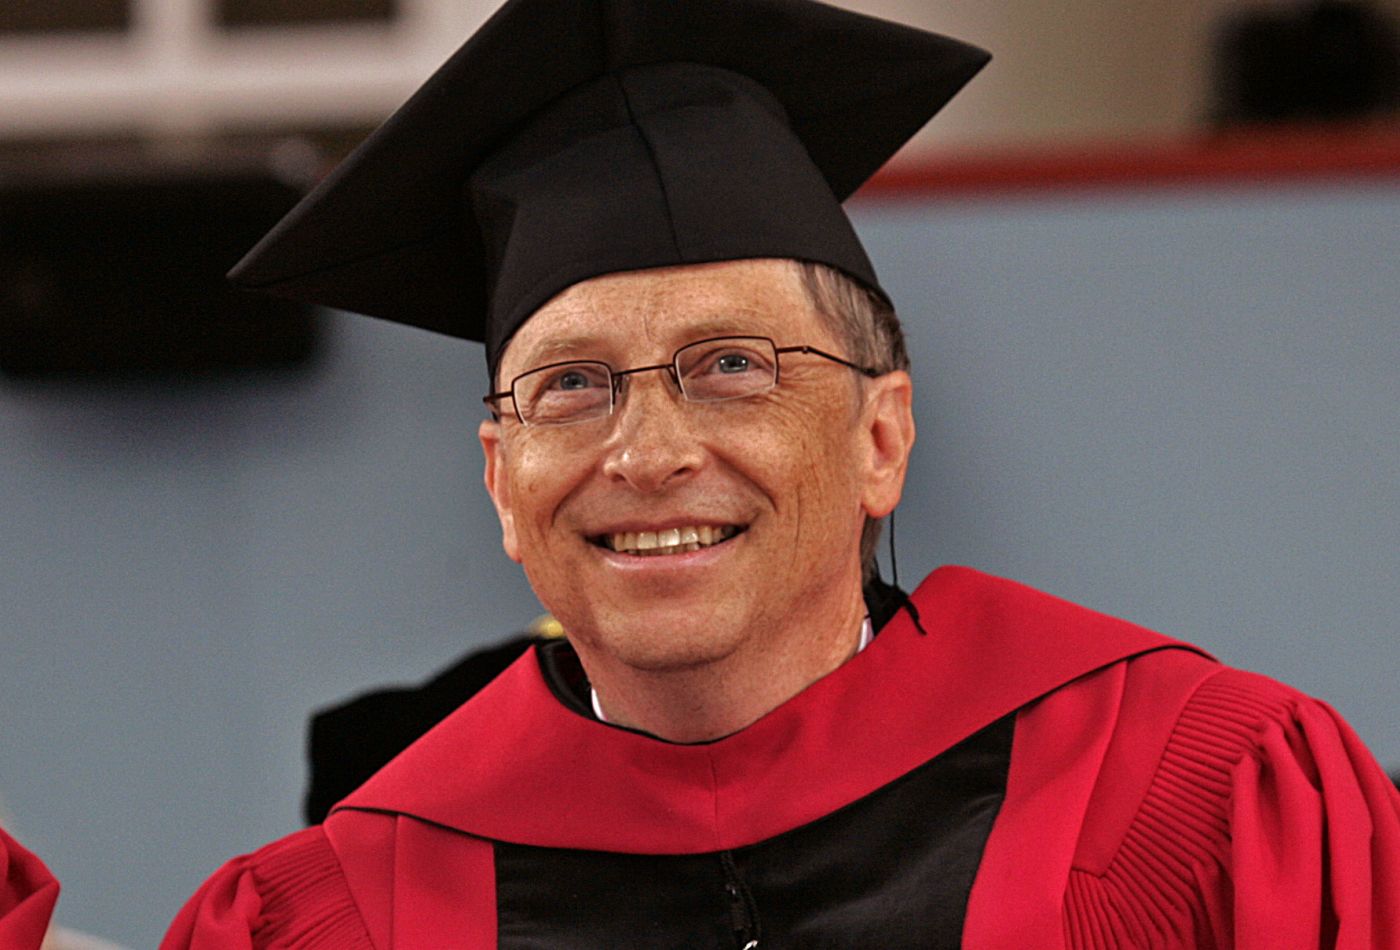 Bill gates Doctorate degree at Harvard University